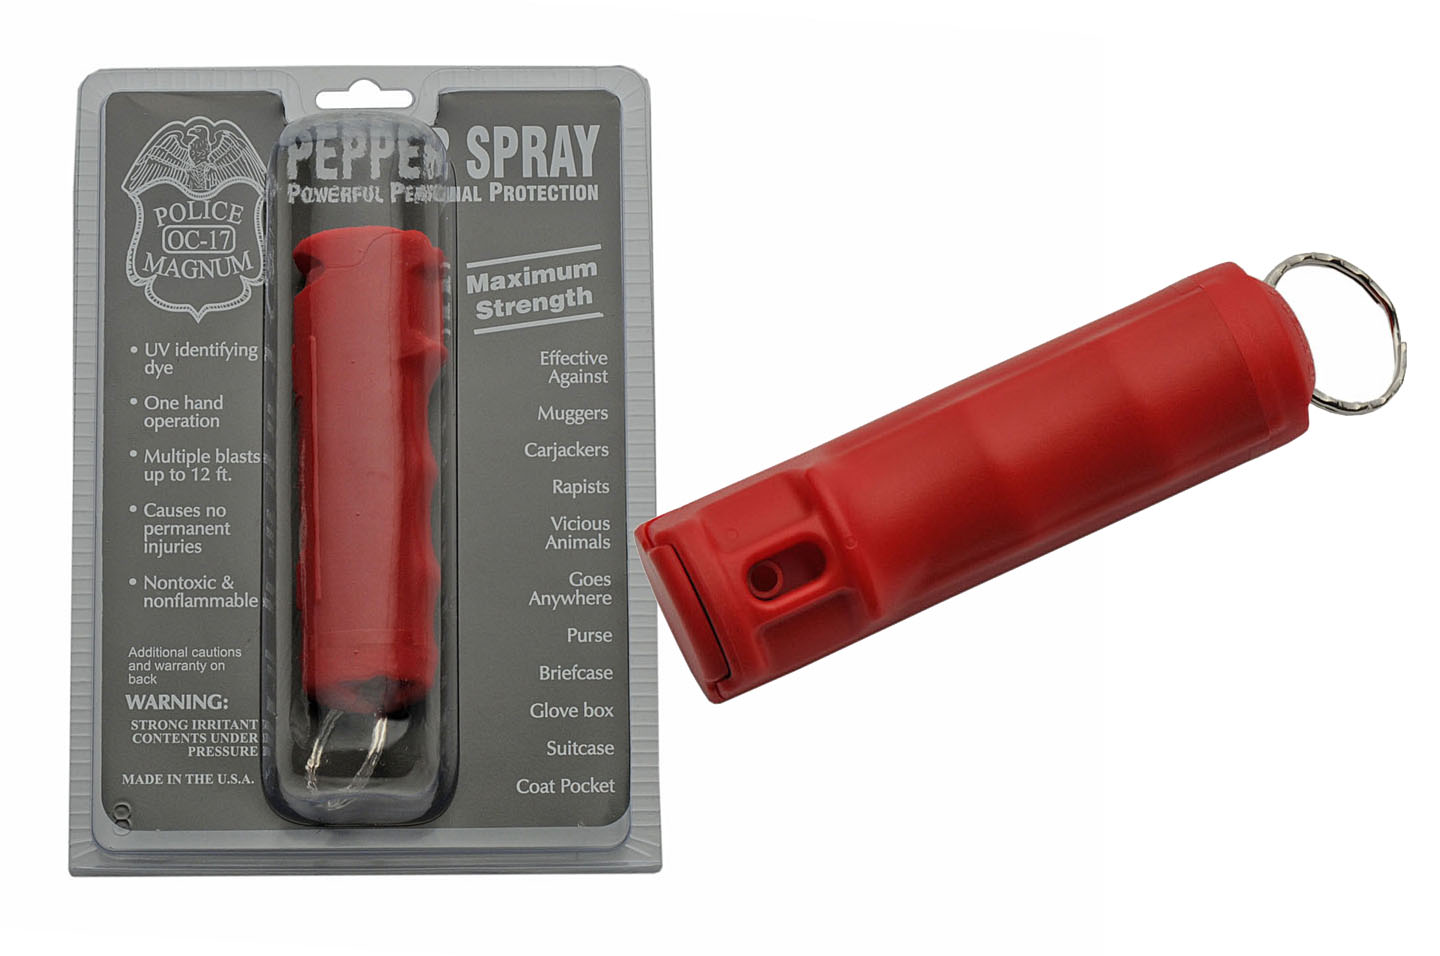 Self-Defense Pepper Spray | Police Oc-17 Magnum Mace 0.5 Oz Keychain - Red